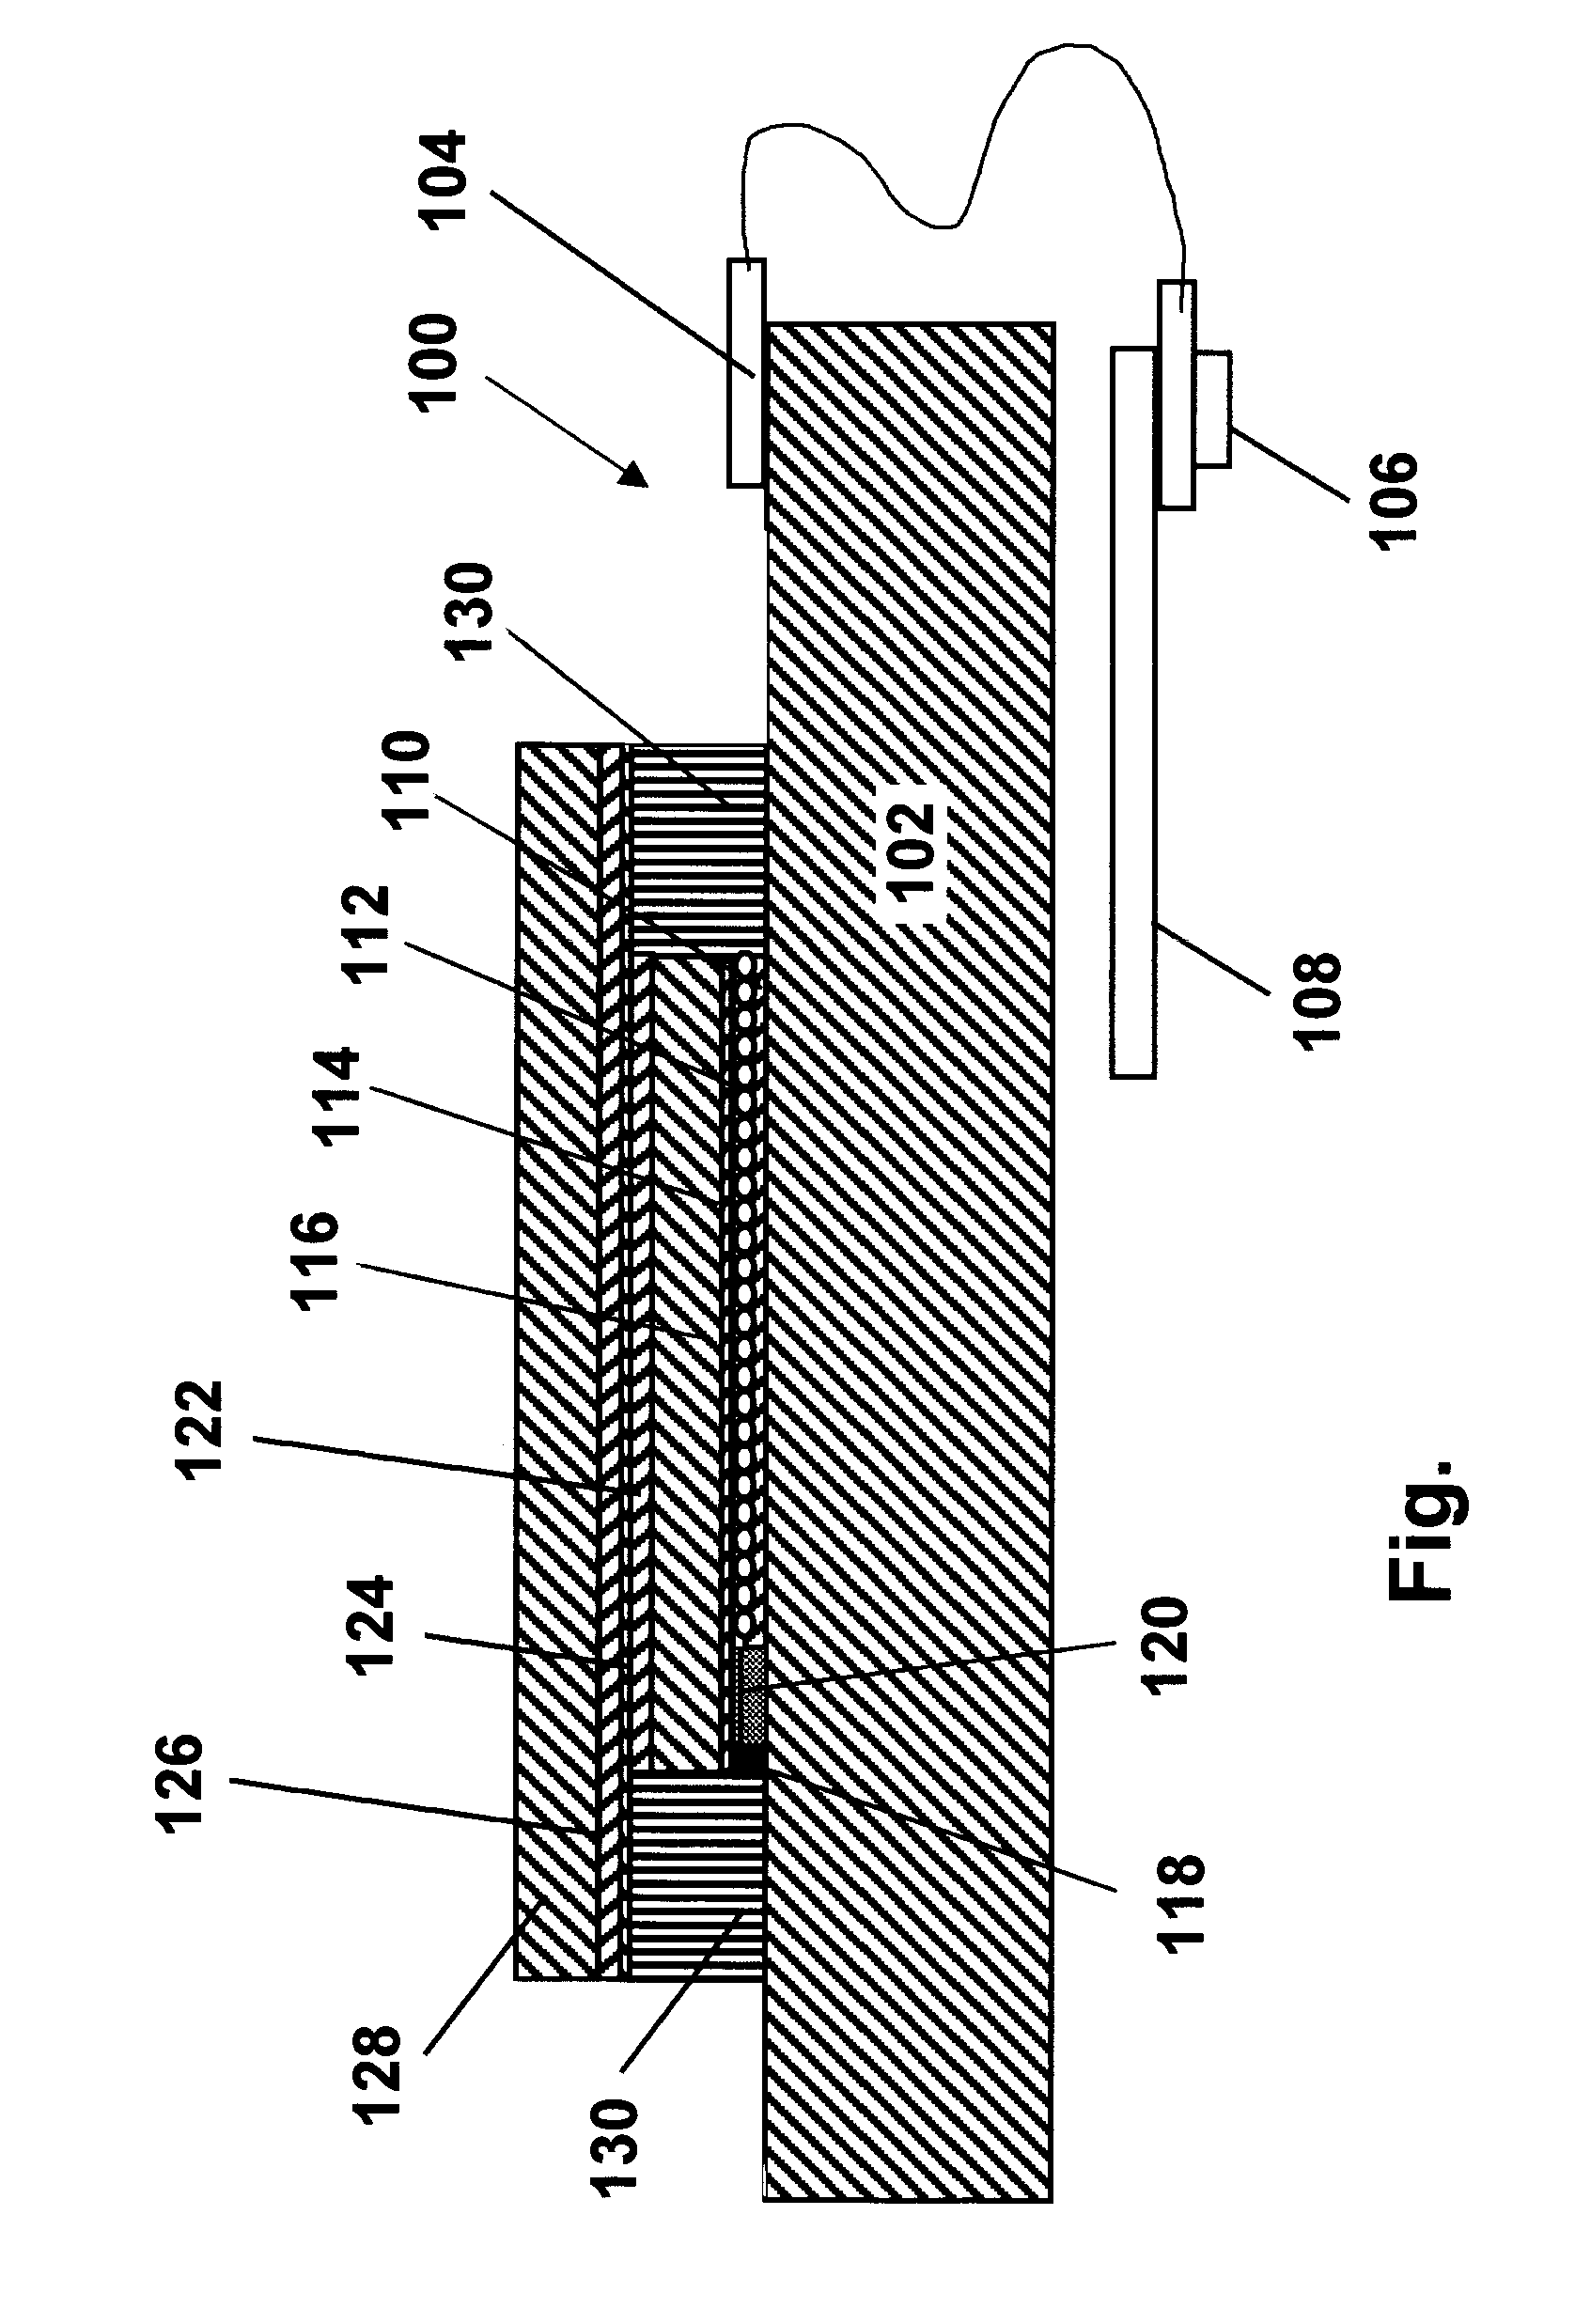 Process for sealing electro-optic displays